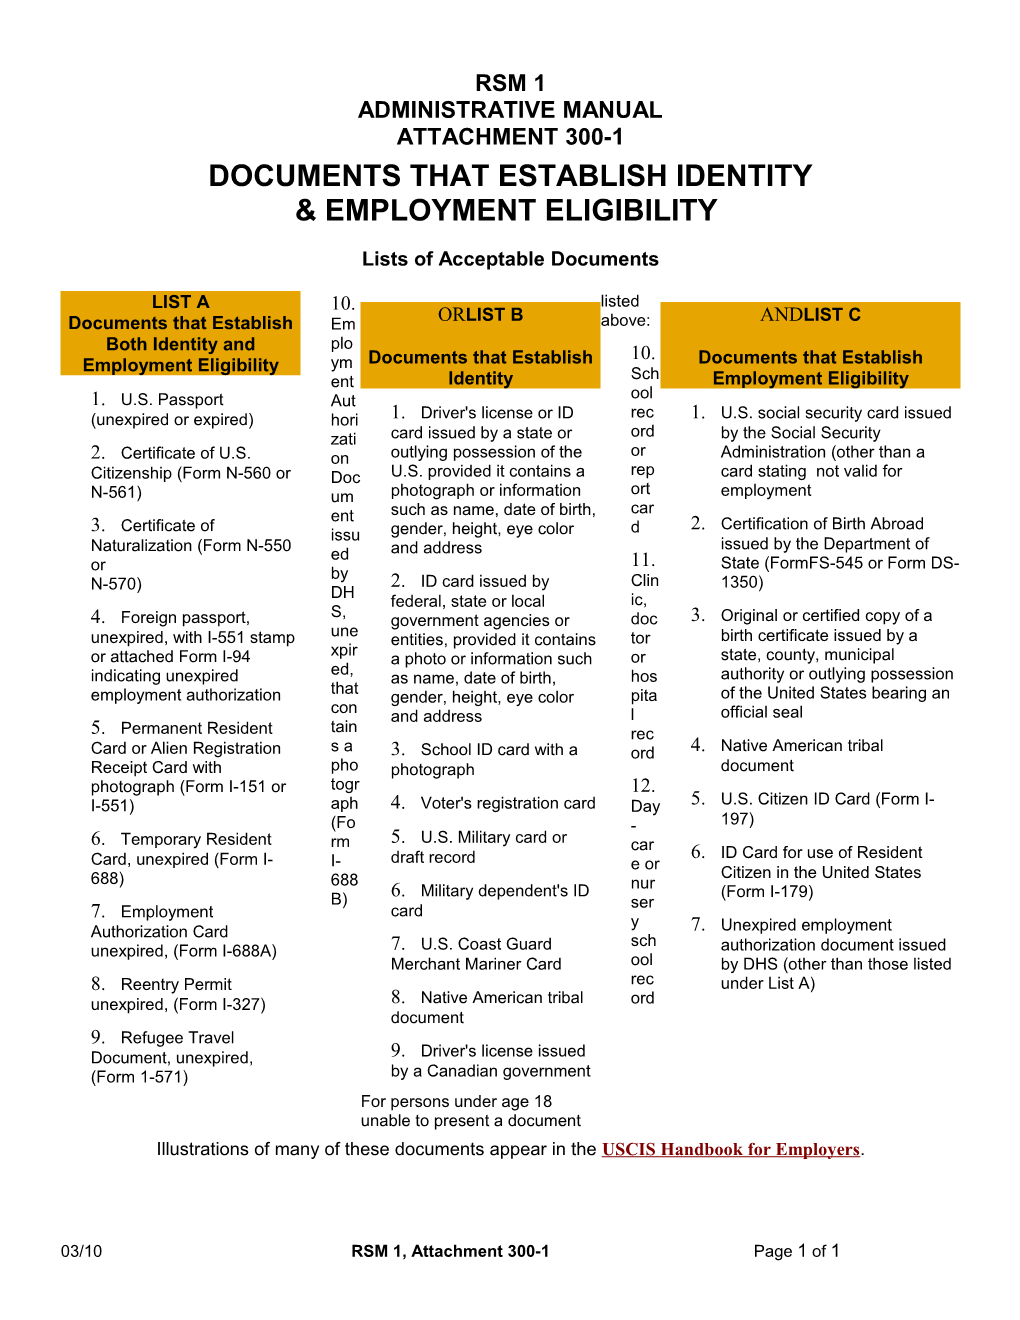 RSM 1, Attachment 300-1: Documents That Establish Identity and Employment Eligibility